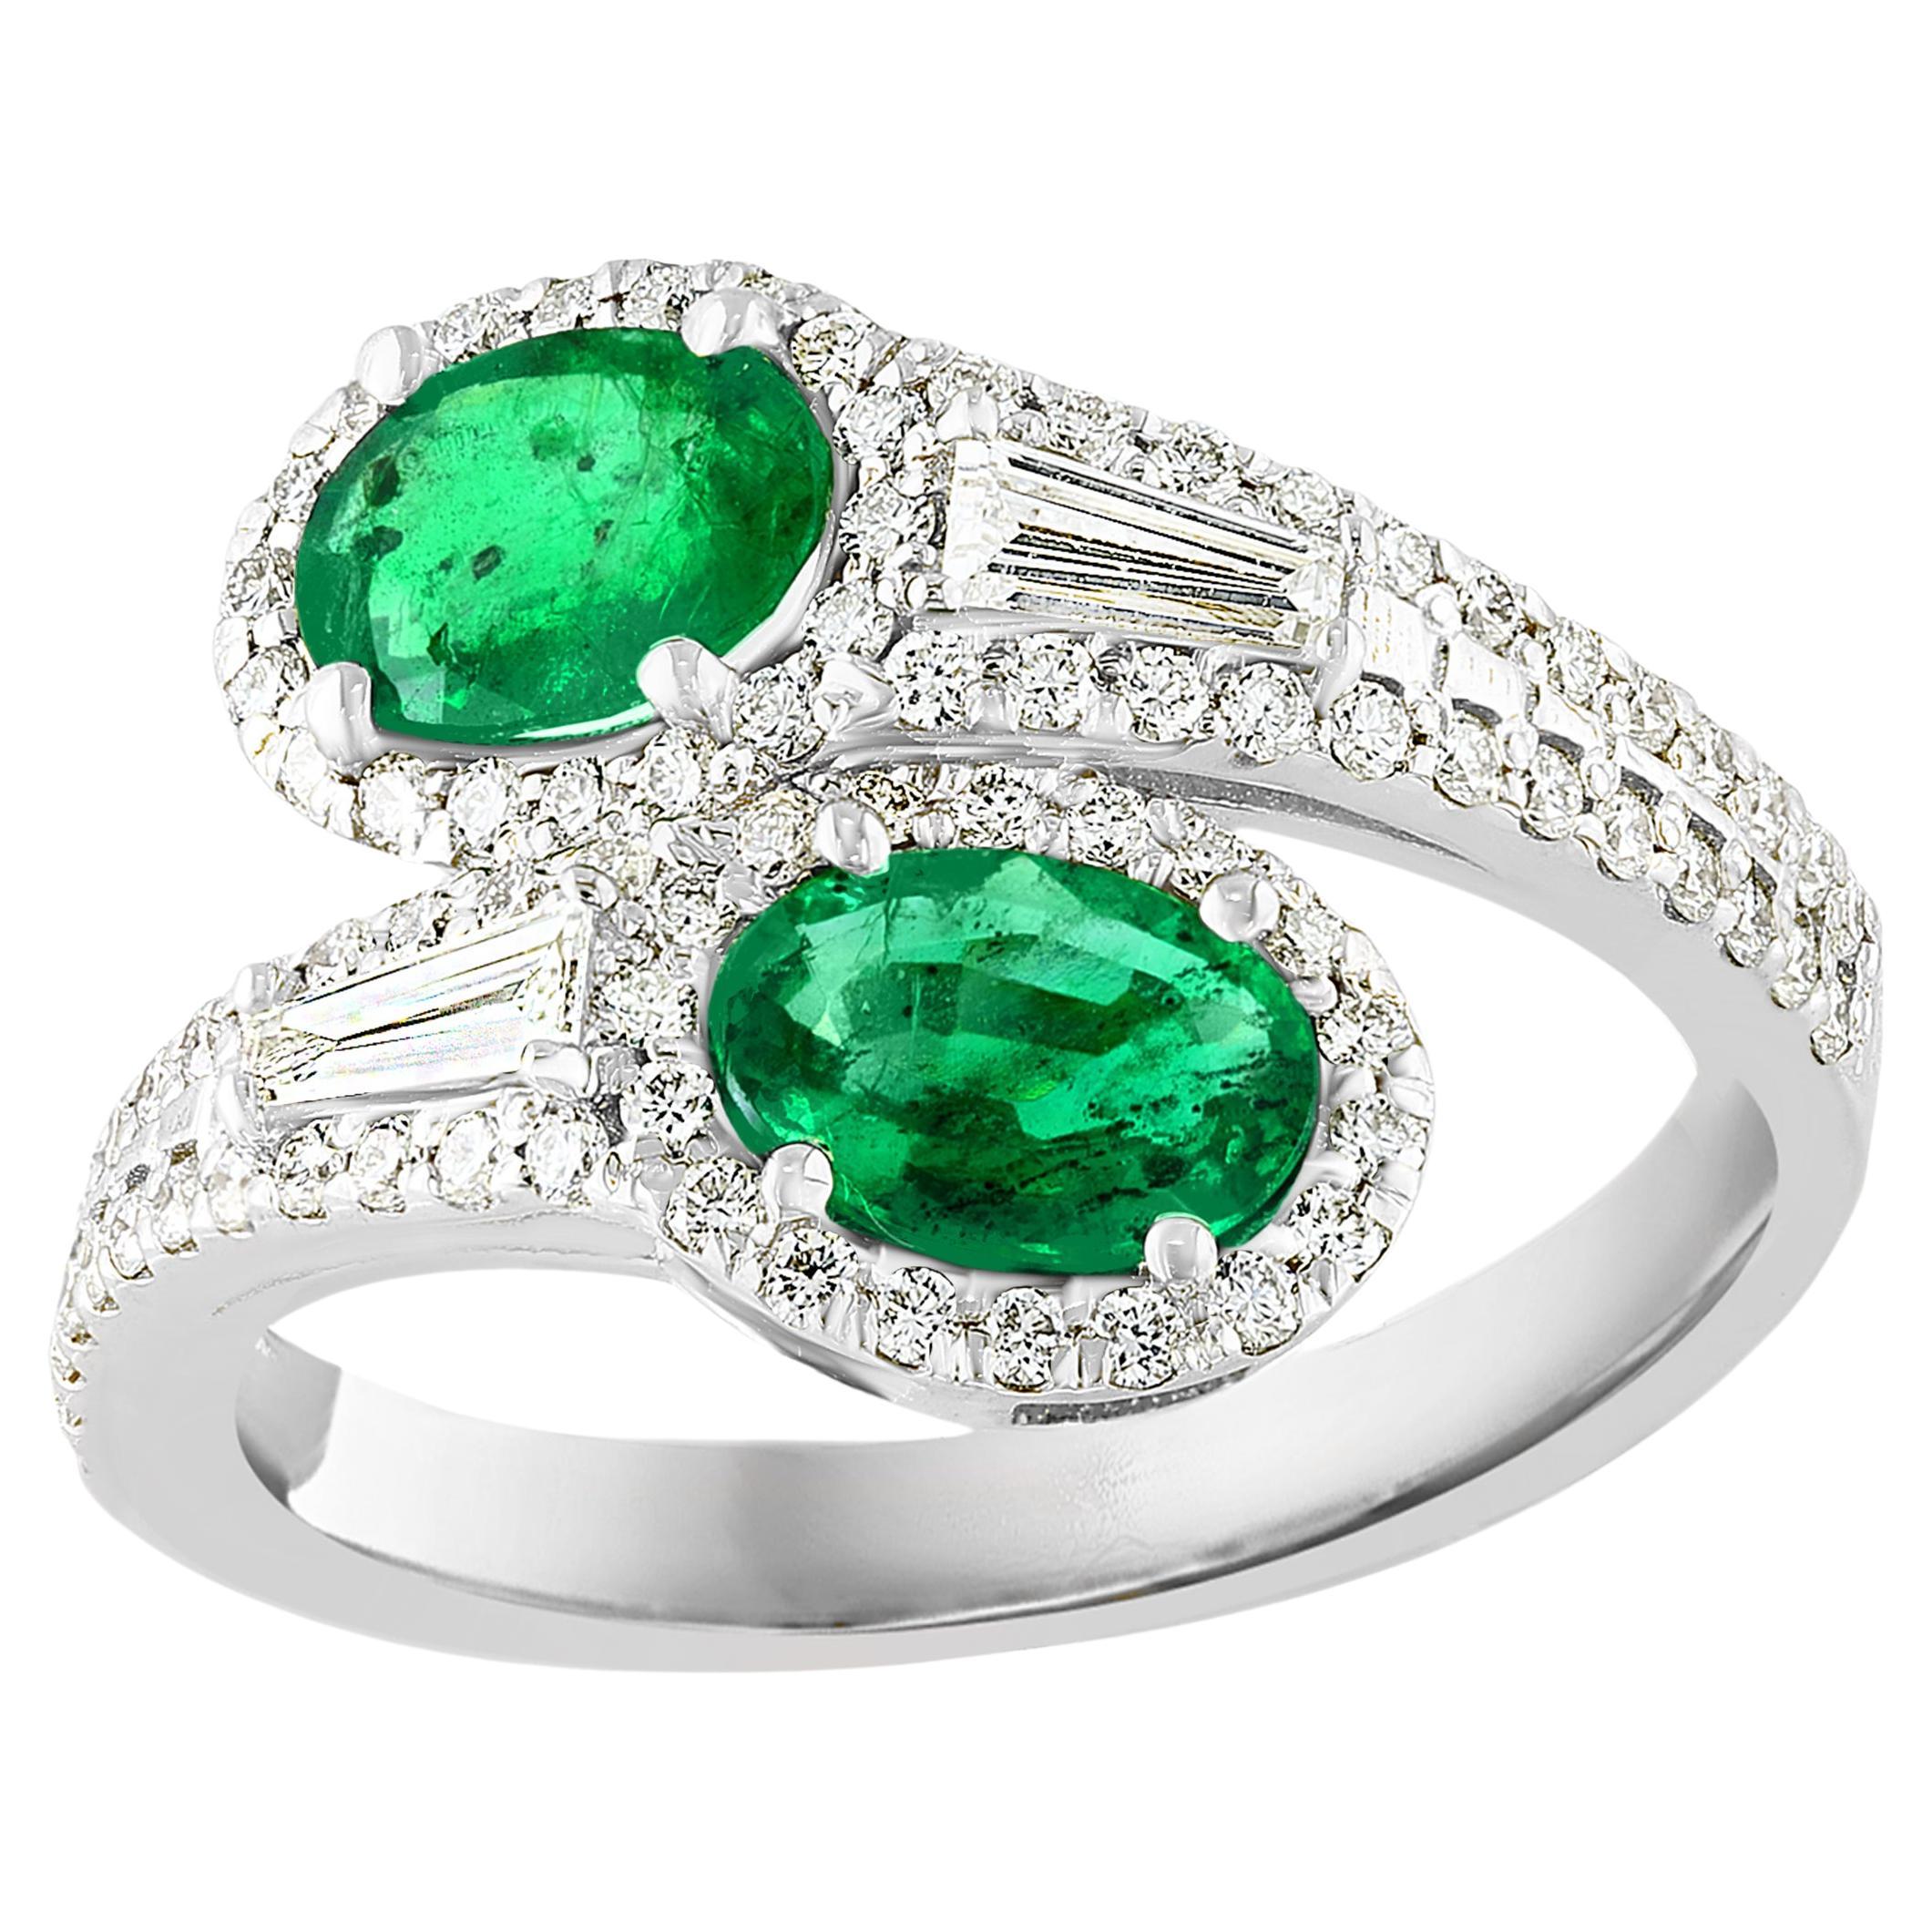 1.52 Carat Oval Cut Emerald Diamond Toi et Moi Engagement Ring 14K White Gold For Sale